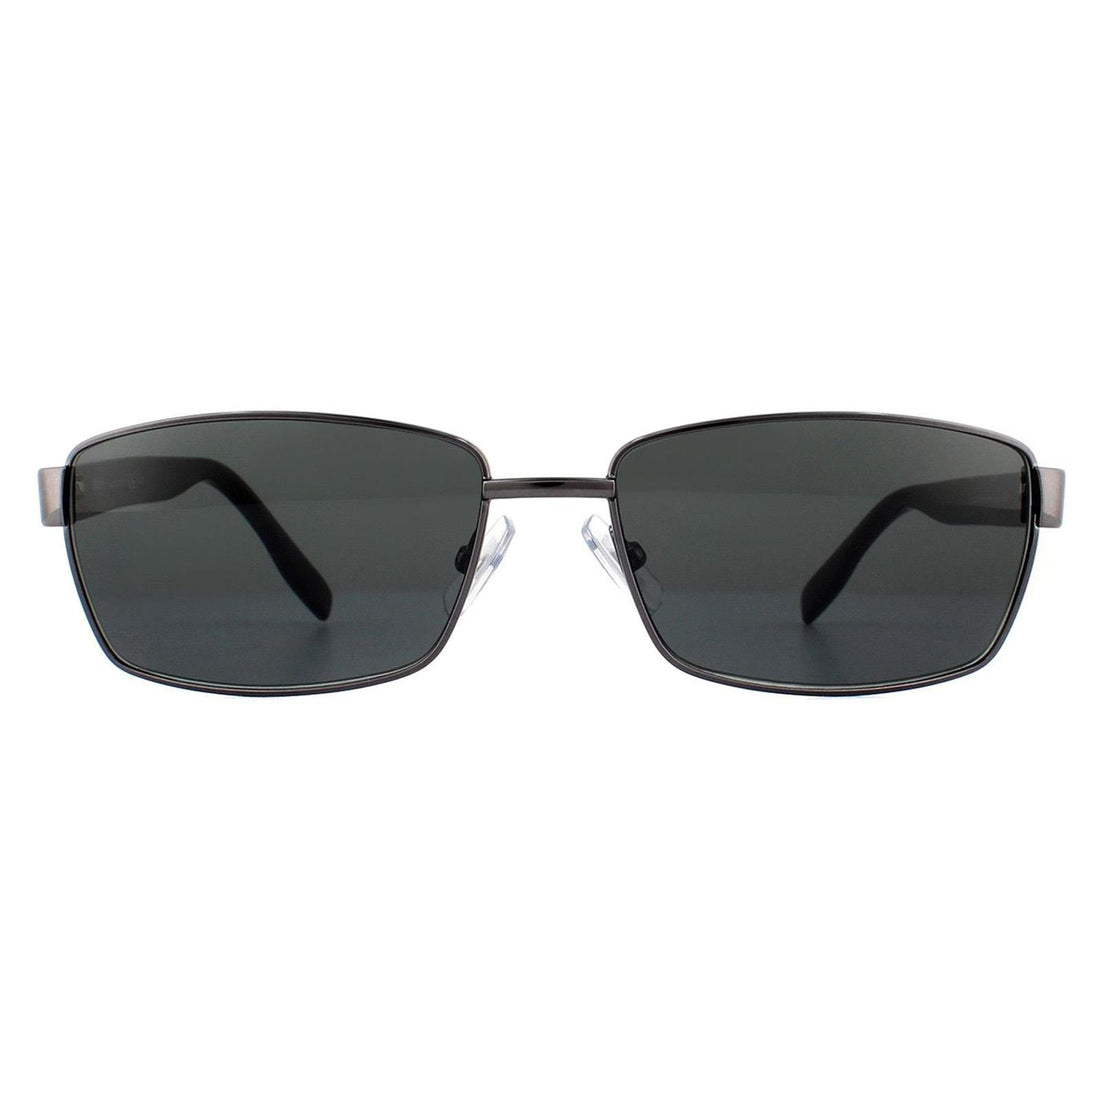 Hugo Boss 0475/S Sunglasses Dark Ruthenium Black / Grey